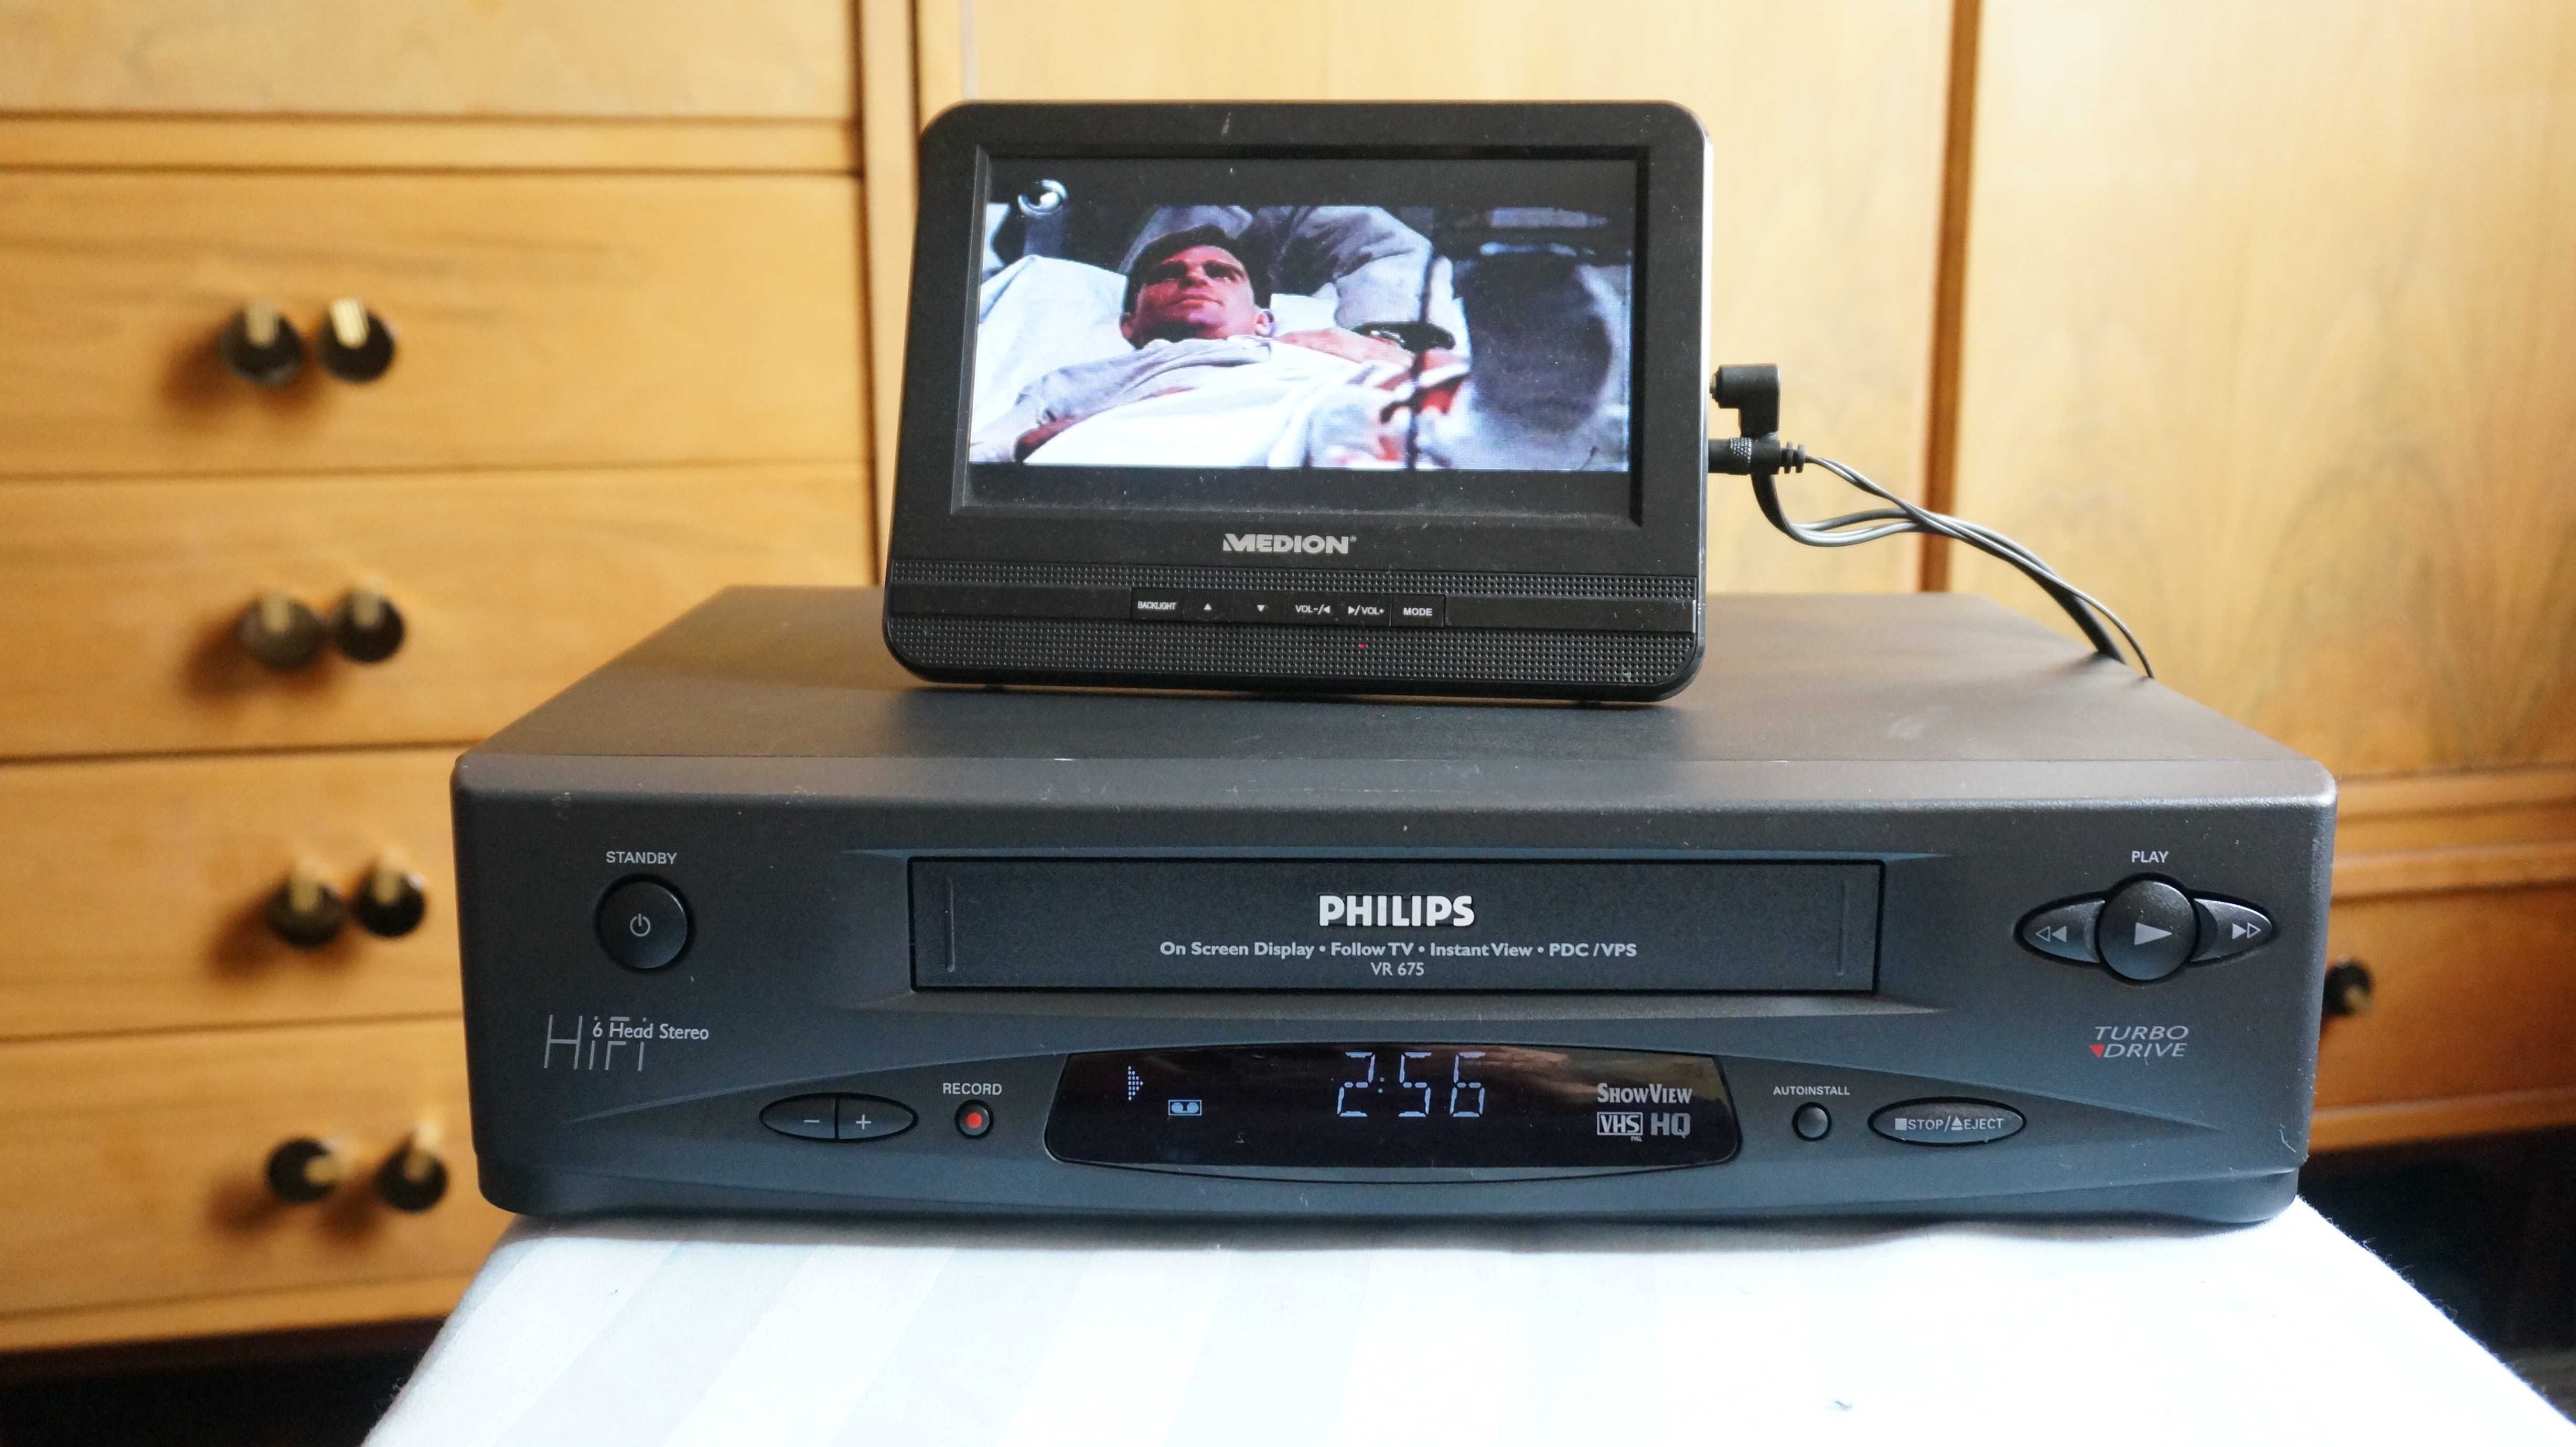 Video recorder VHS Philips model VR675 Stereo Hi-Fi